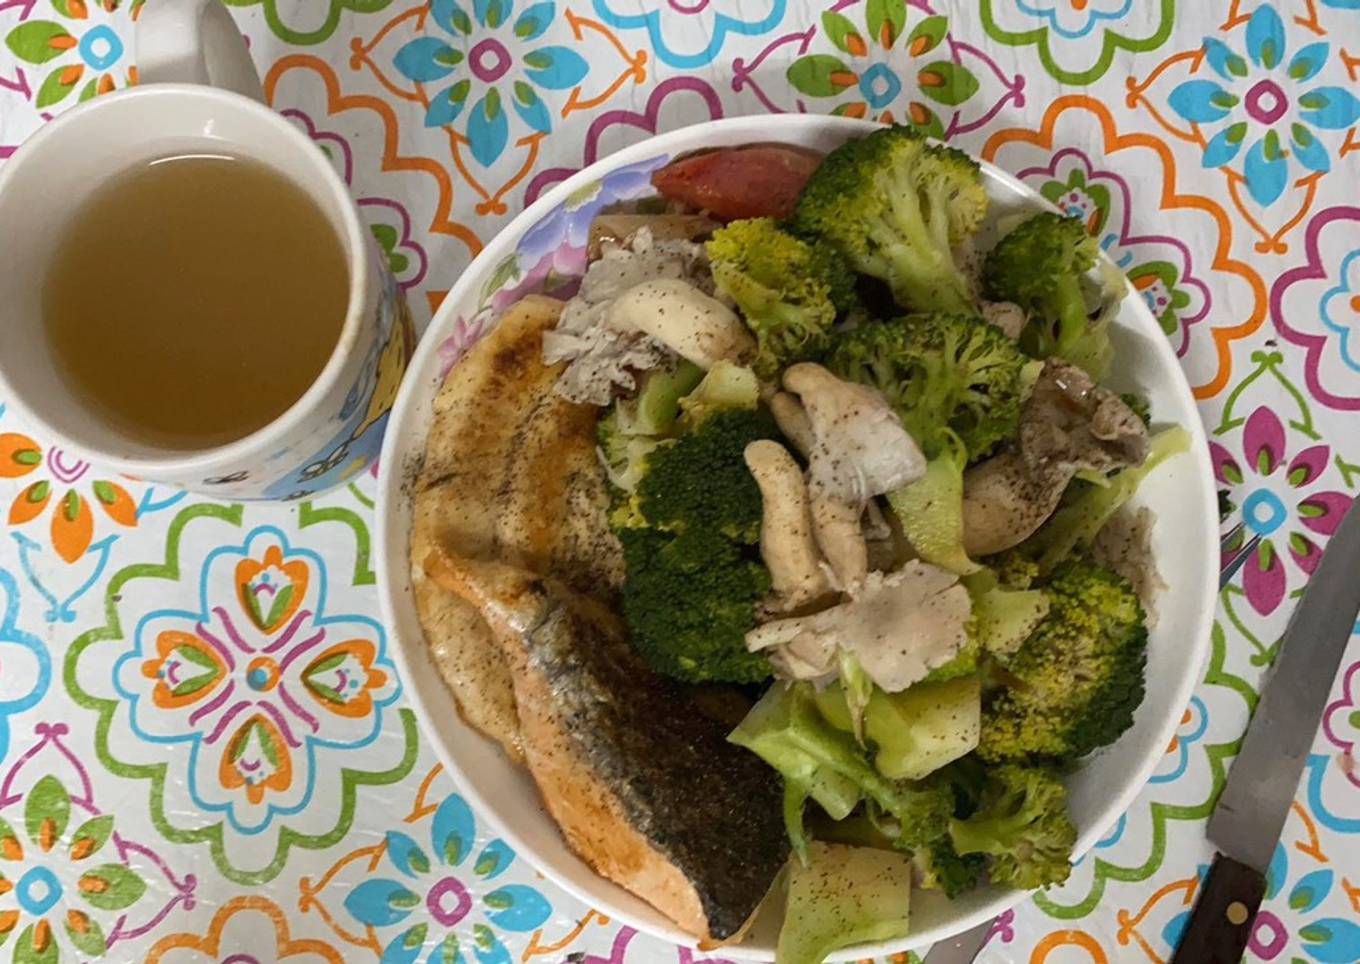 Salmon & Chicken steak with broccoli mushroom 

#Edema - no salt🧂
#211 plate